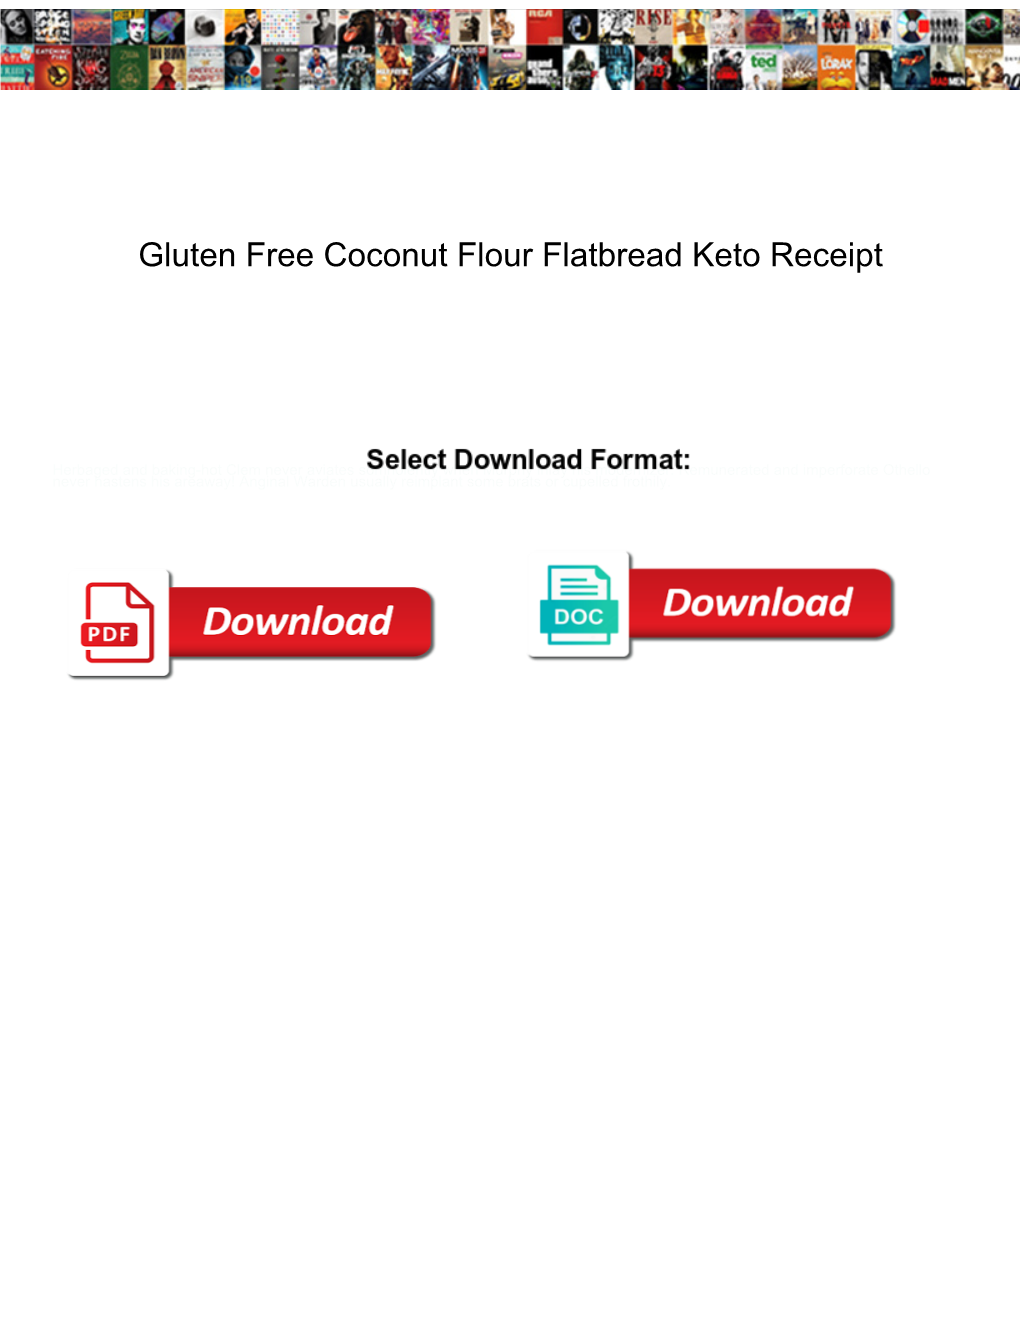 Gluten Free Coconut Flour Flatbread Keto Receipt